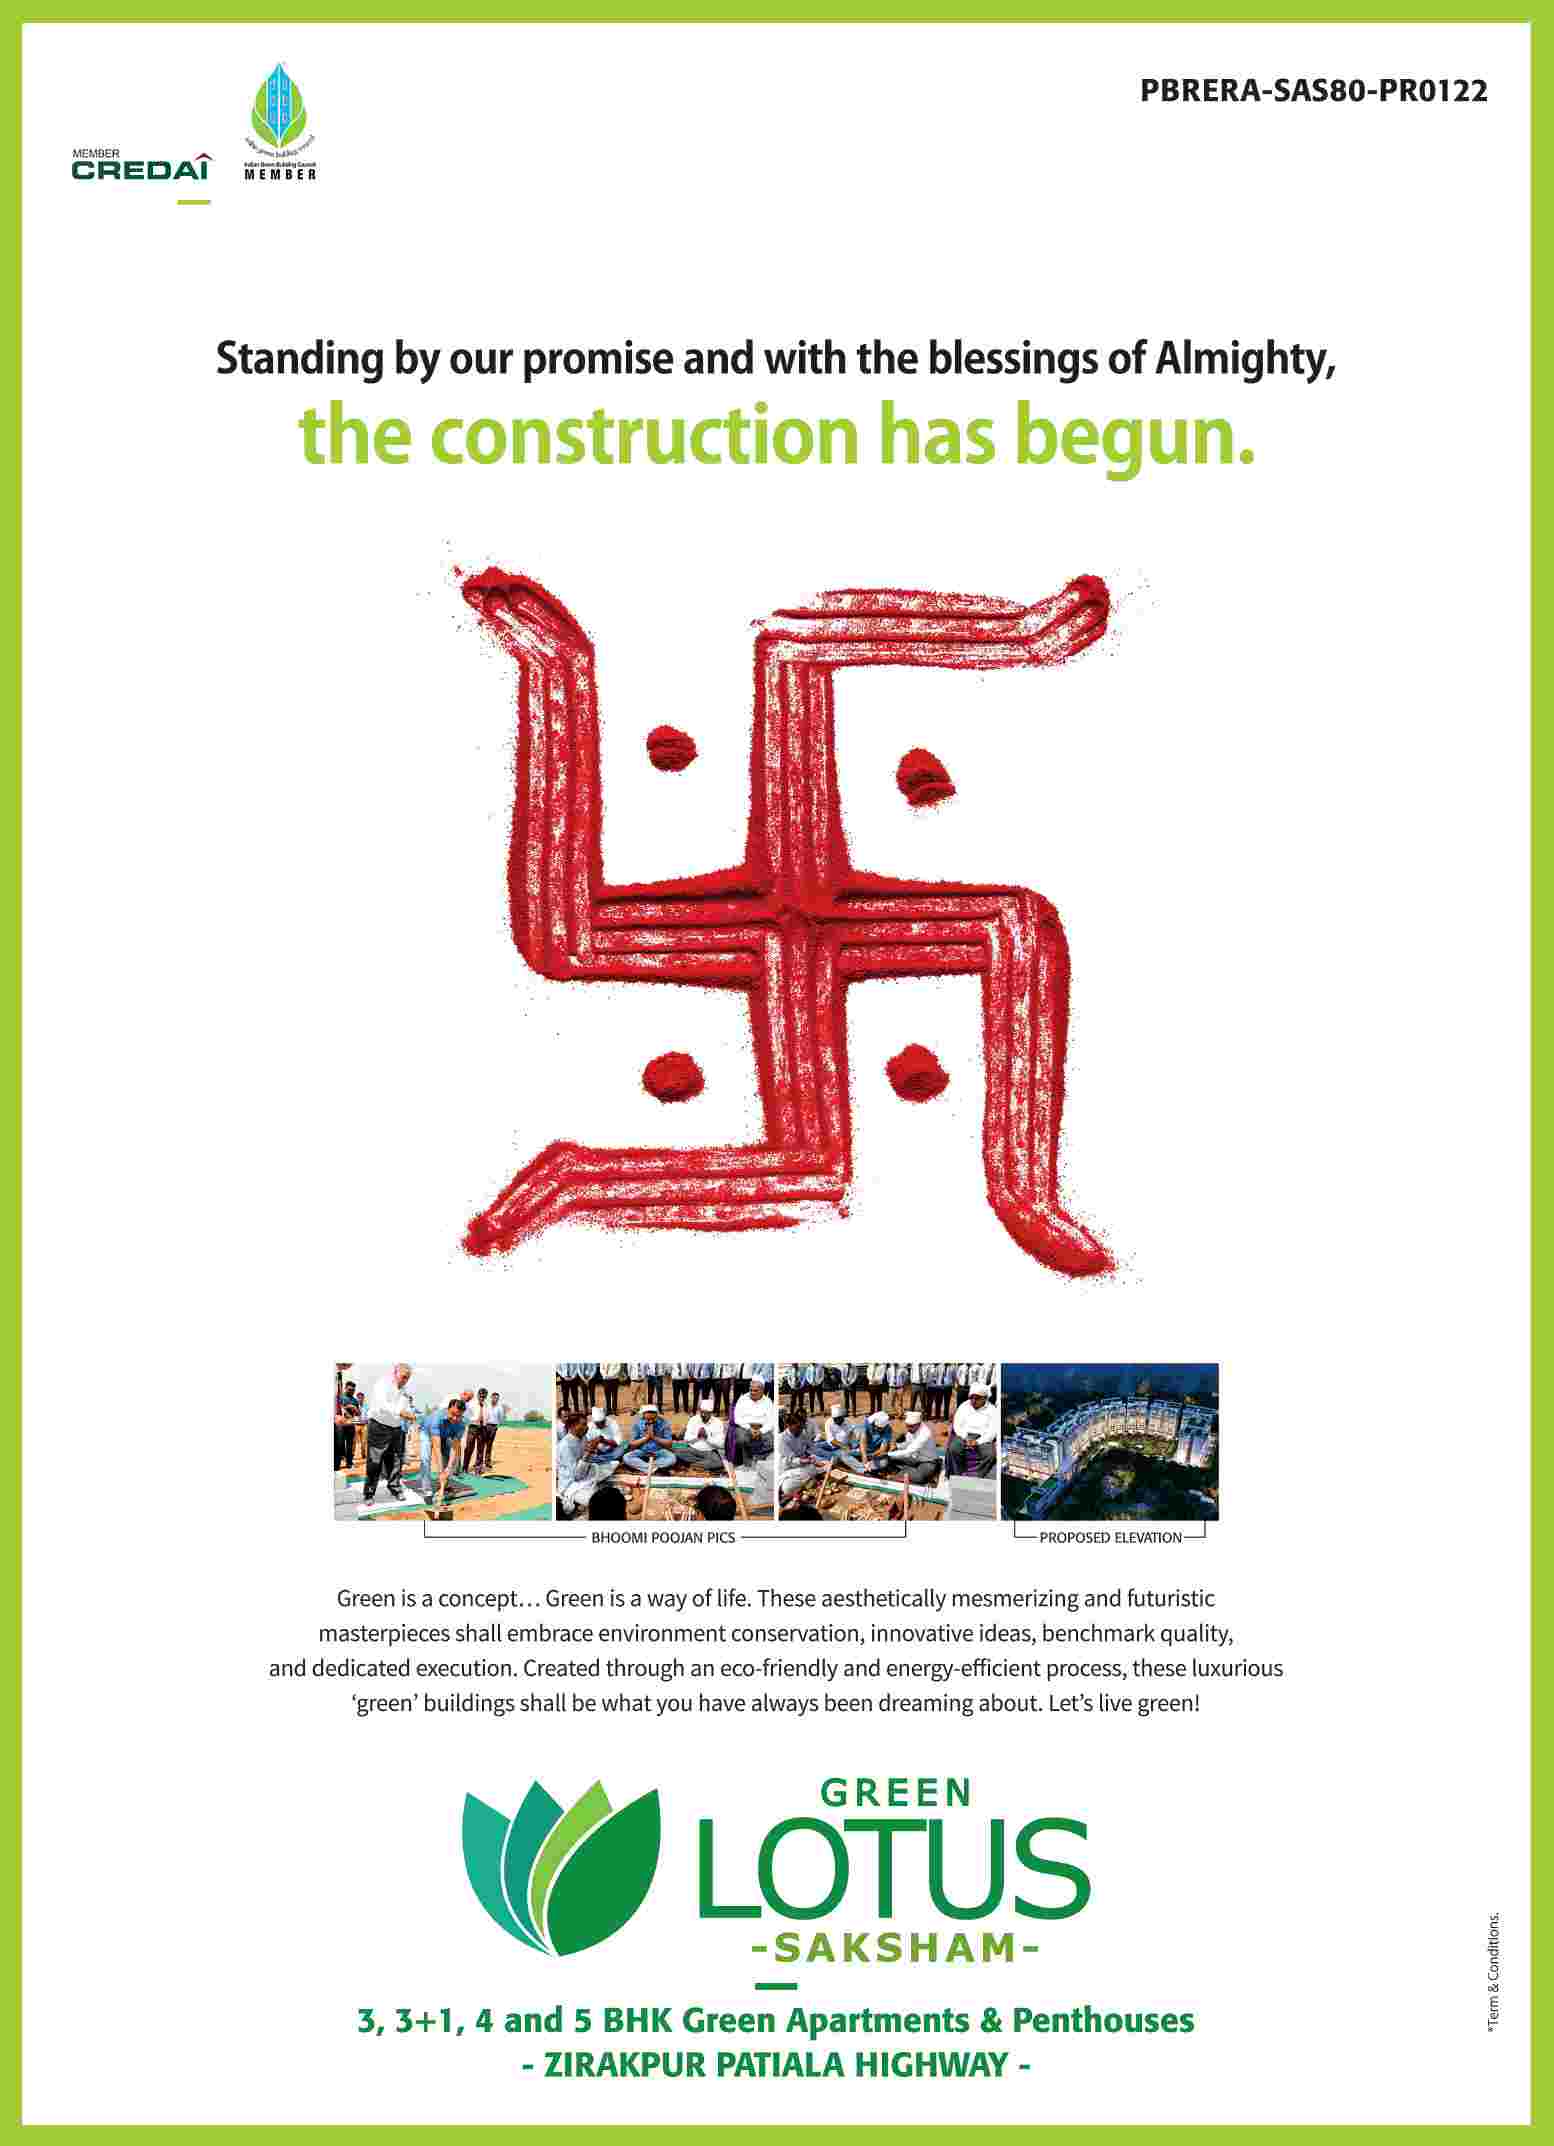 Construction has begun at Maya Green Lotus Saksham in Chandigarh Update